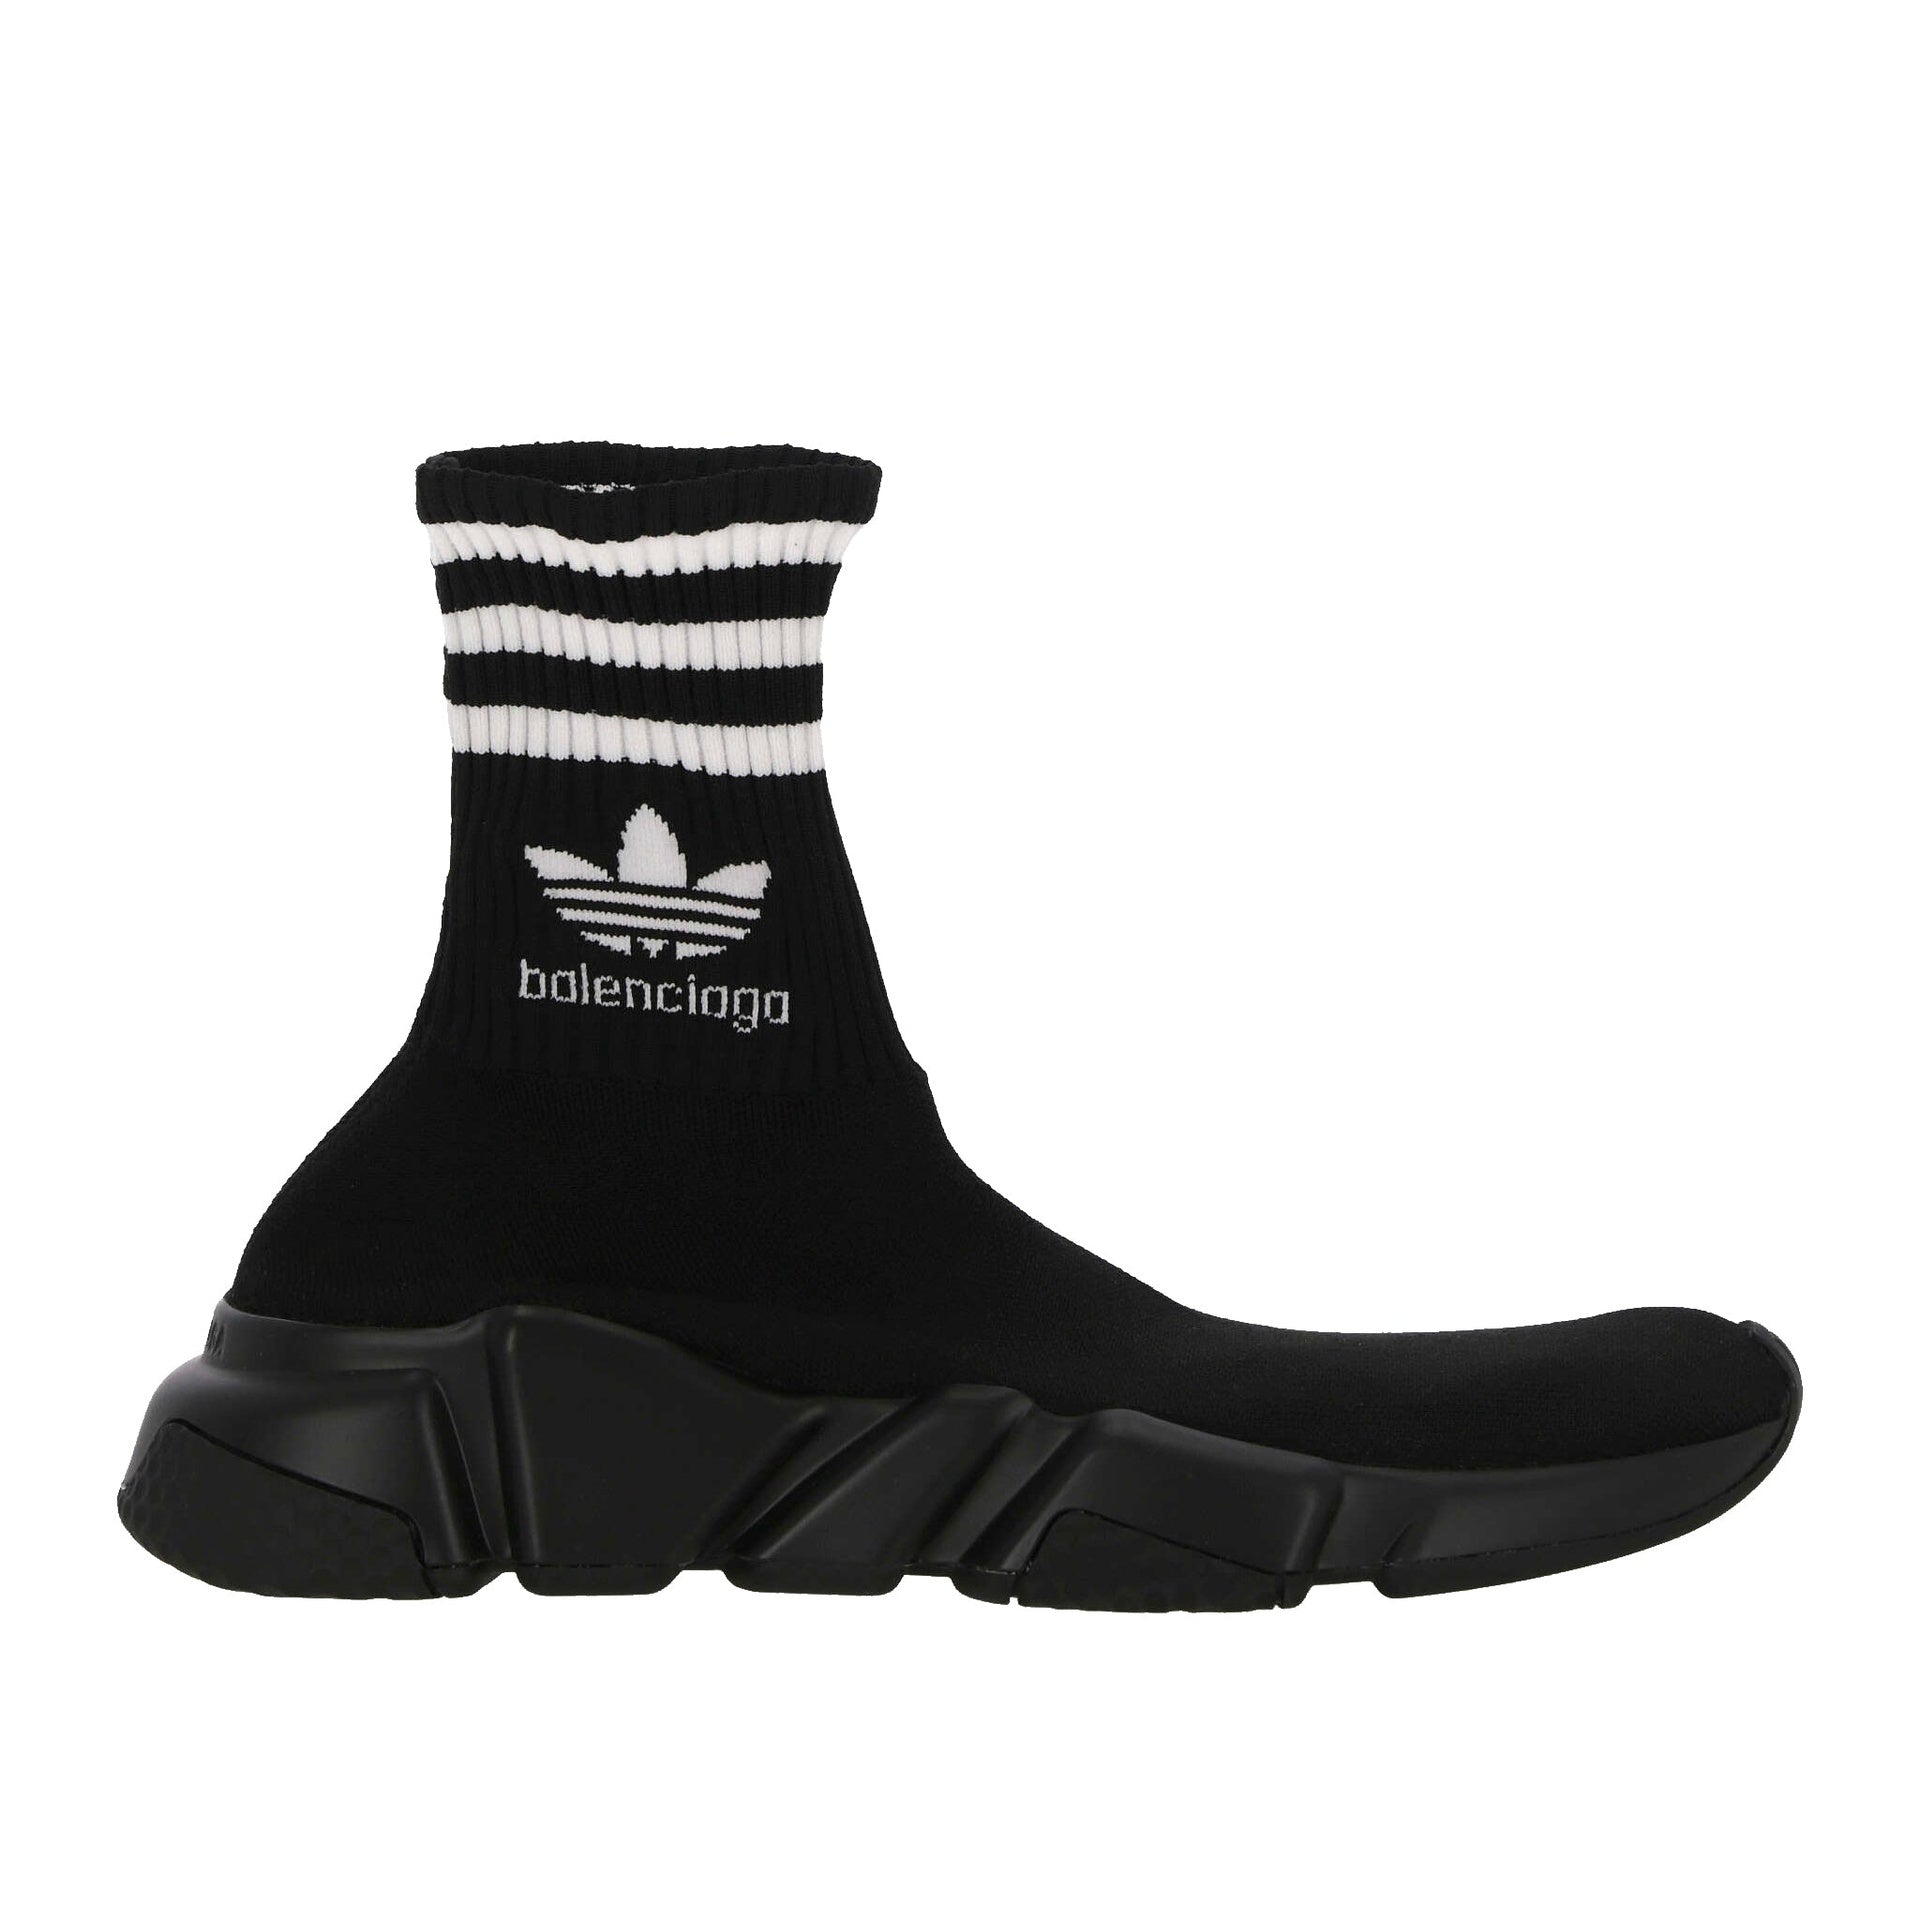 BALENCIAGA-X-ADIDAS-OUTLET-SALE-Balenciaga-X-Adidas-Speed-2_0-Lt-Sock-Sneakers-Sneakers-BLACK-35-ARCHIVE-COLLECTION.jpg